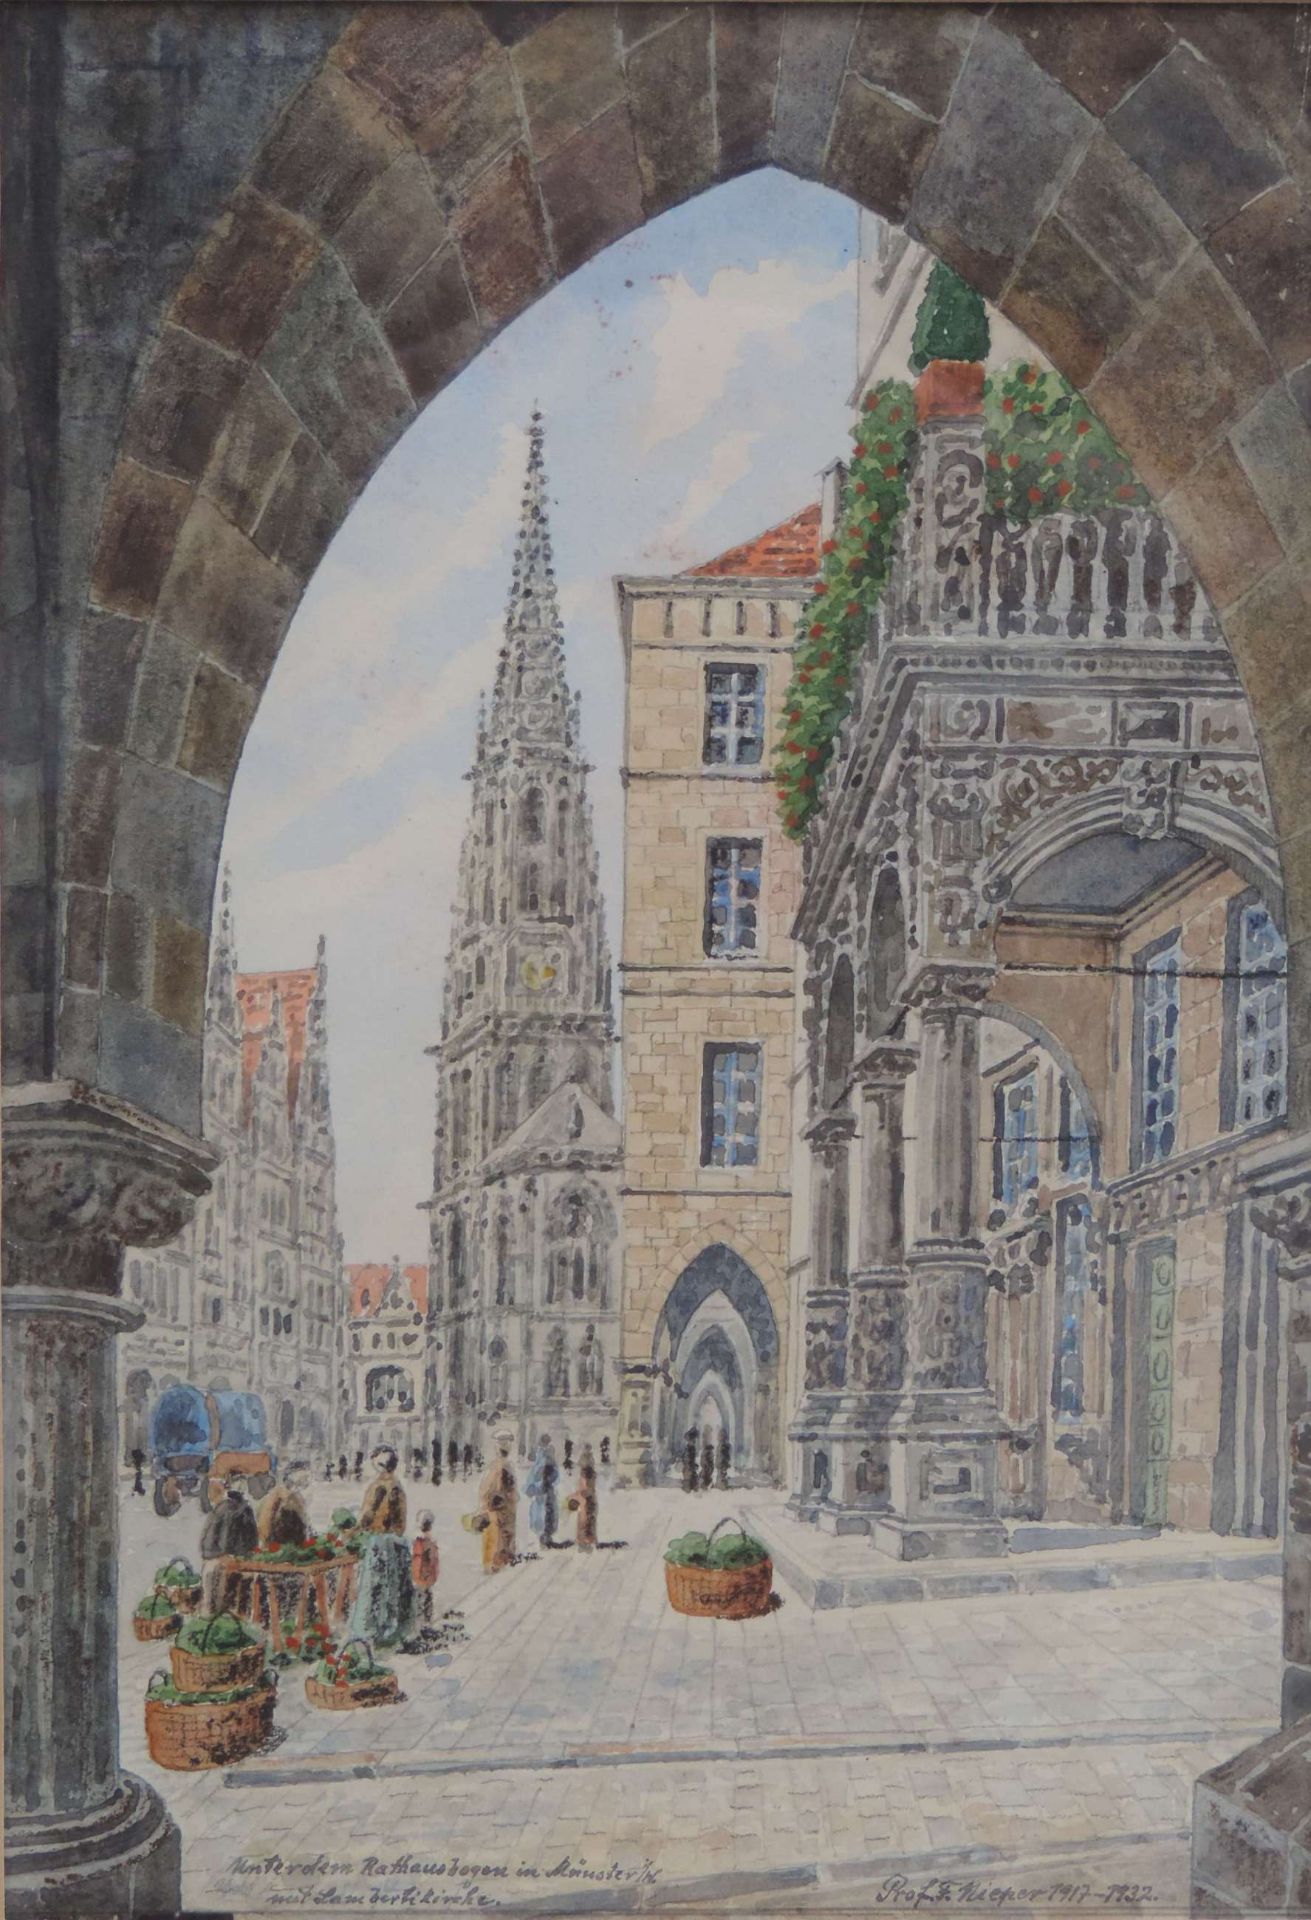 NIEPER, F. Prof., Aquarell, Prinzipalmarkt, 1917-32, "Unter dem Rathausbogen in Münster/W mit